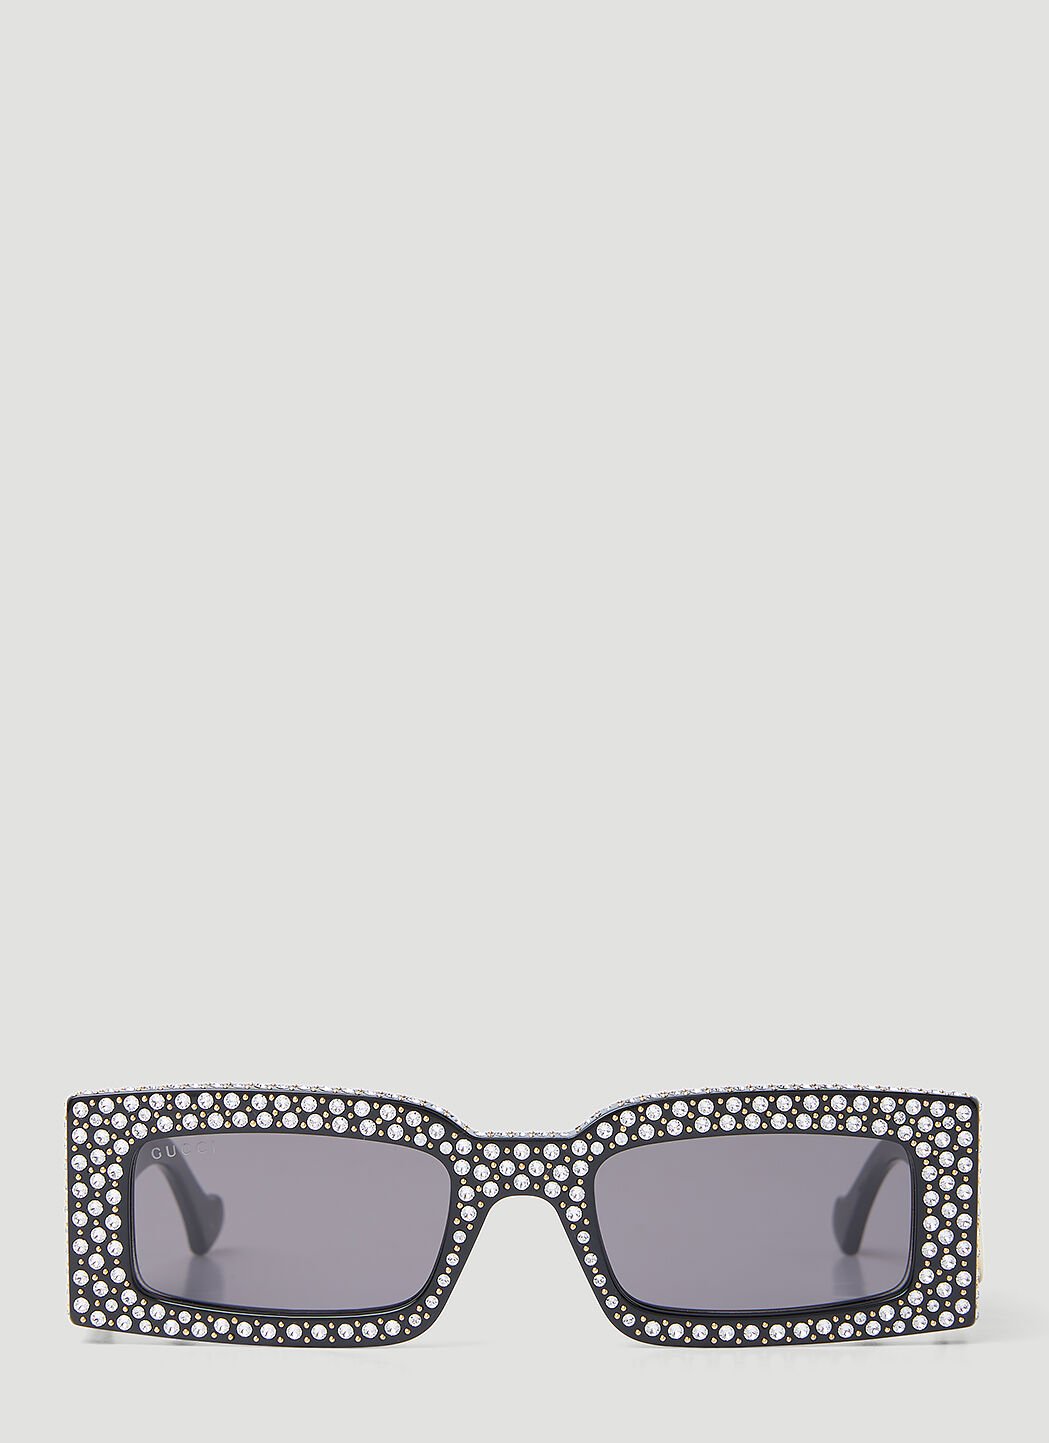 Balenciaga Crystal Embellished Rectangular Sunglasses Black bcs0253001